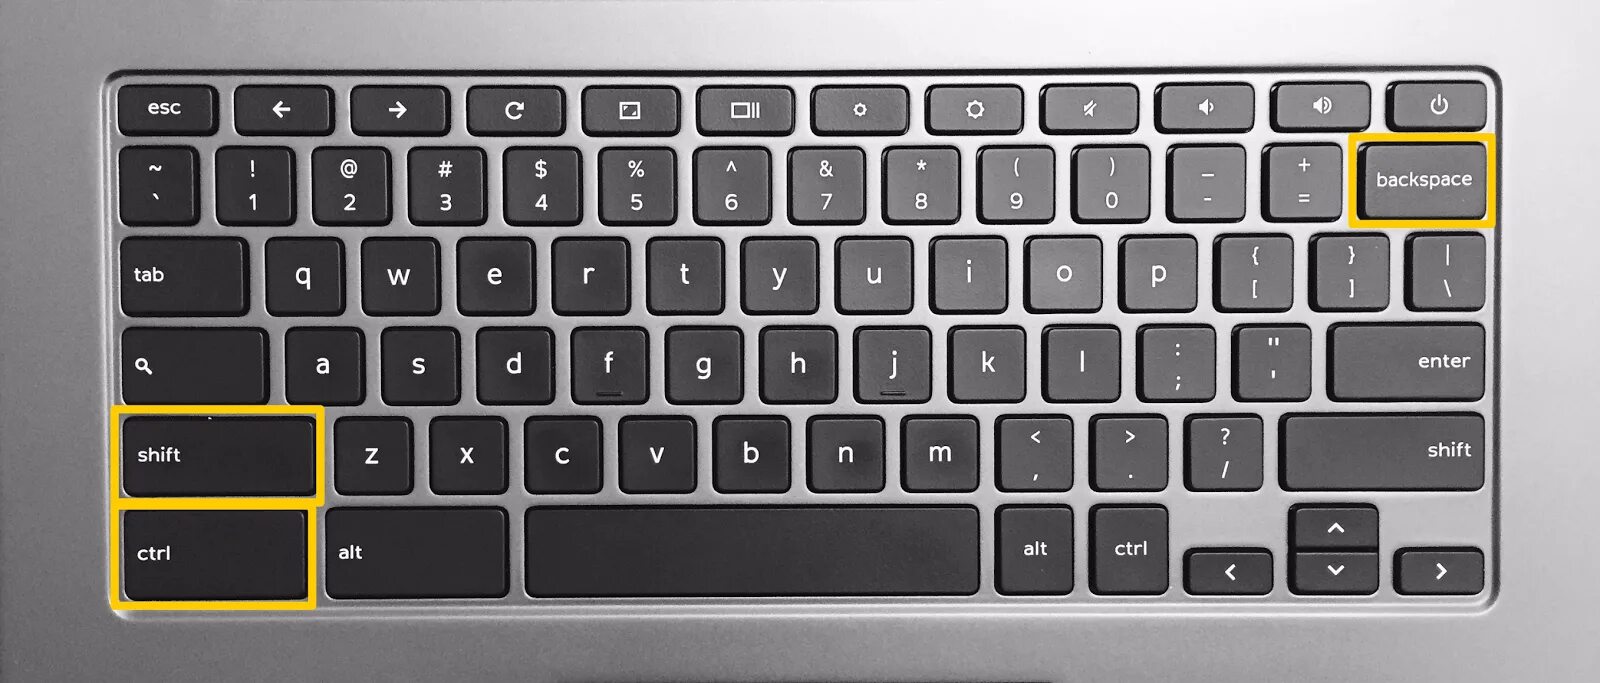 Клавиша шифт. Контр Альт шифт. Кнопка шифт на клаве. Клавиша Shift на ноутбуке.